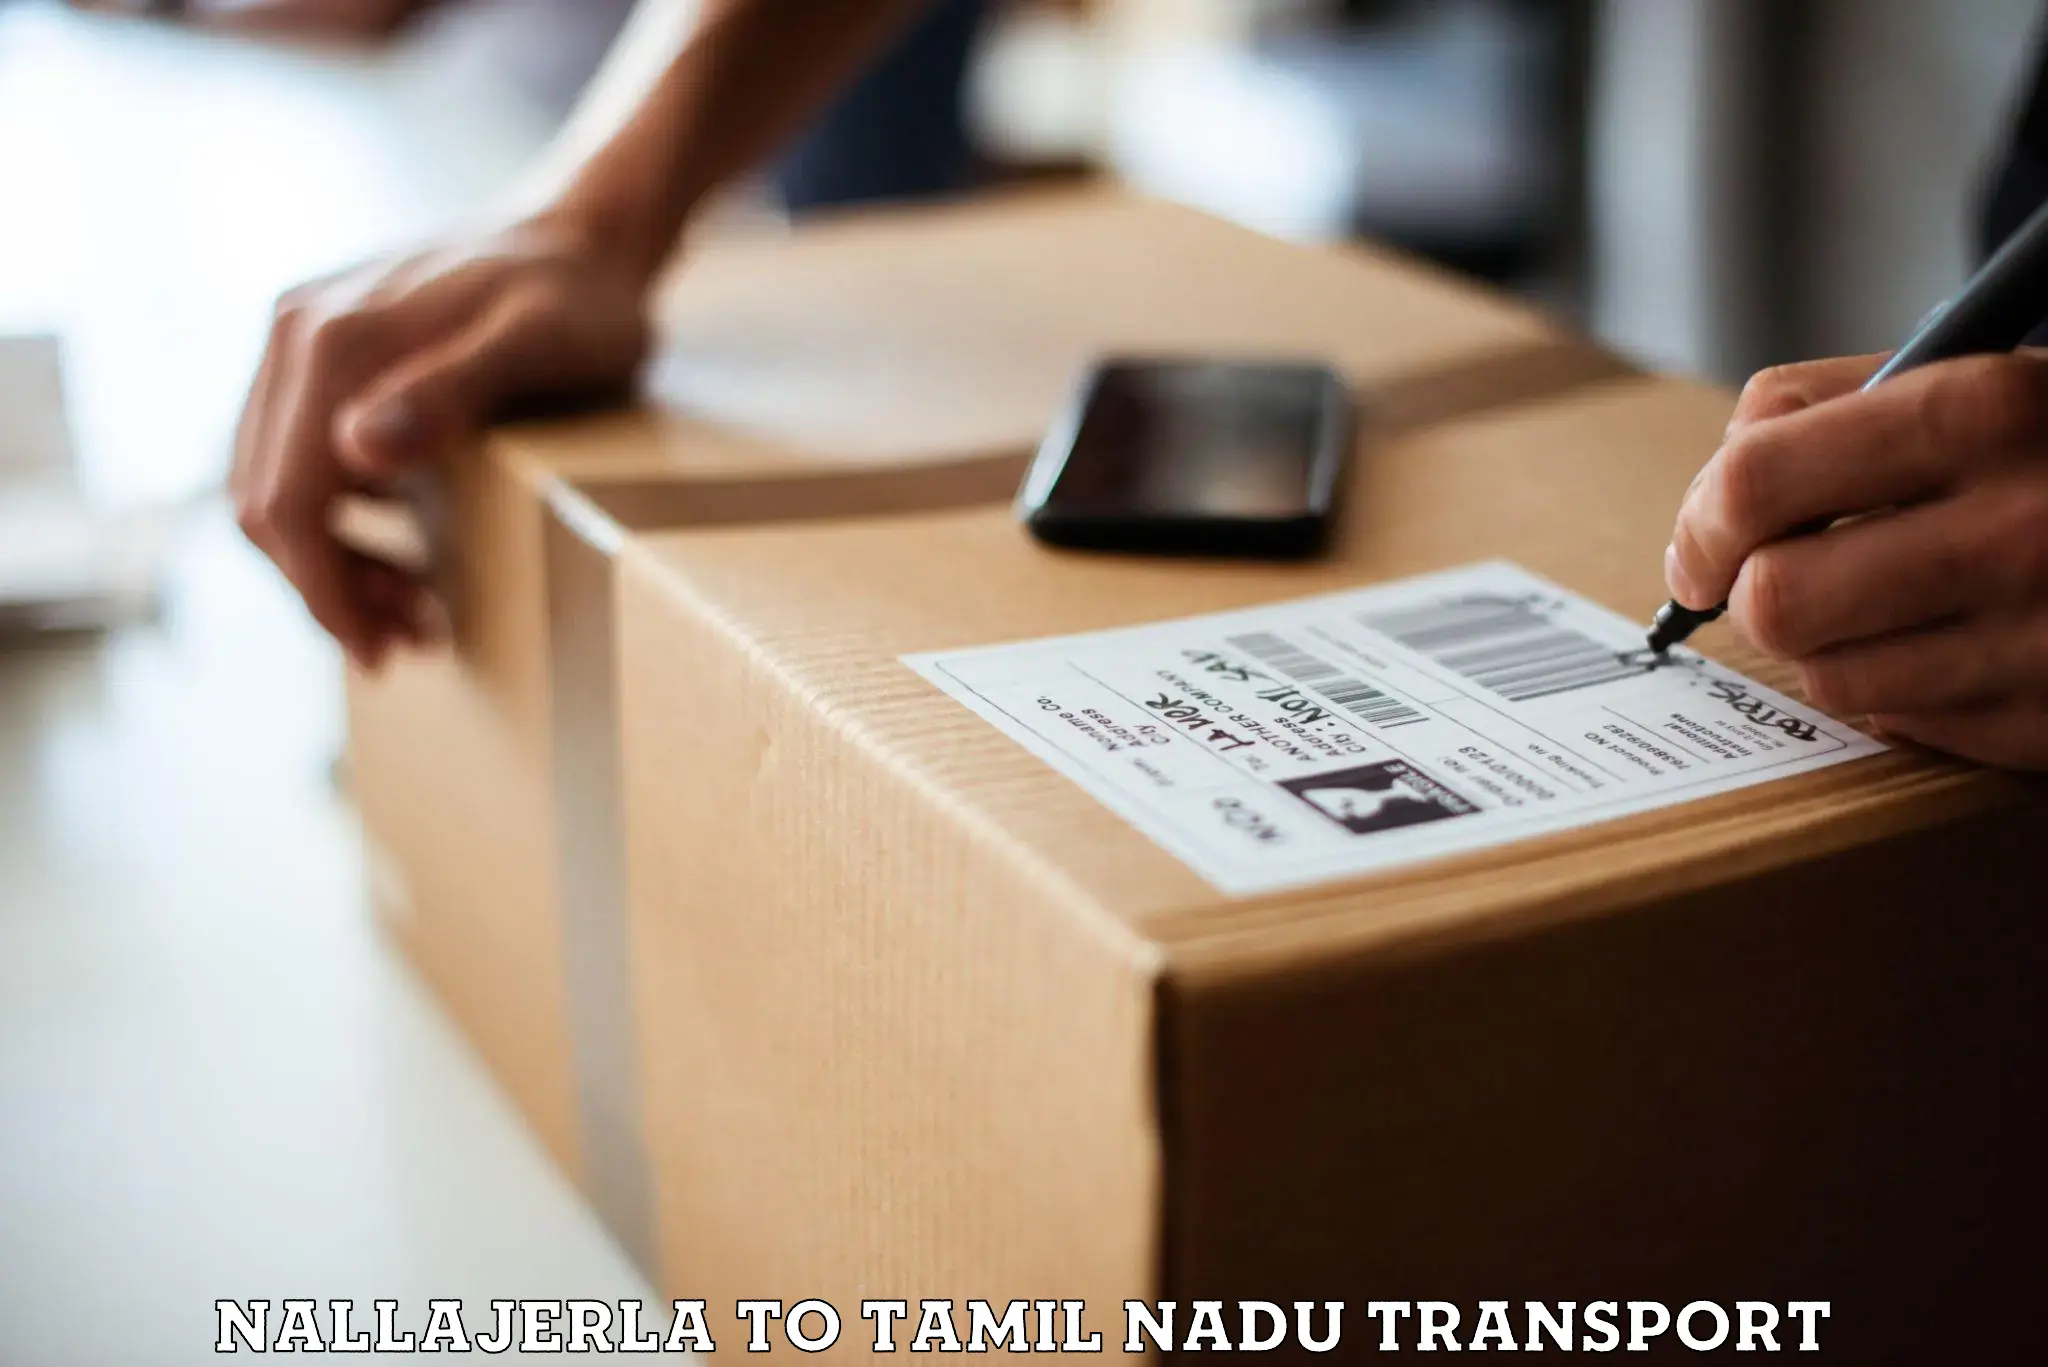 Shipping partner Nallajerla to Tamil Nadu